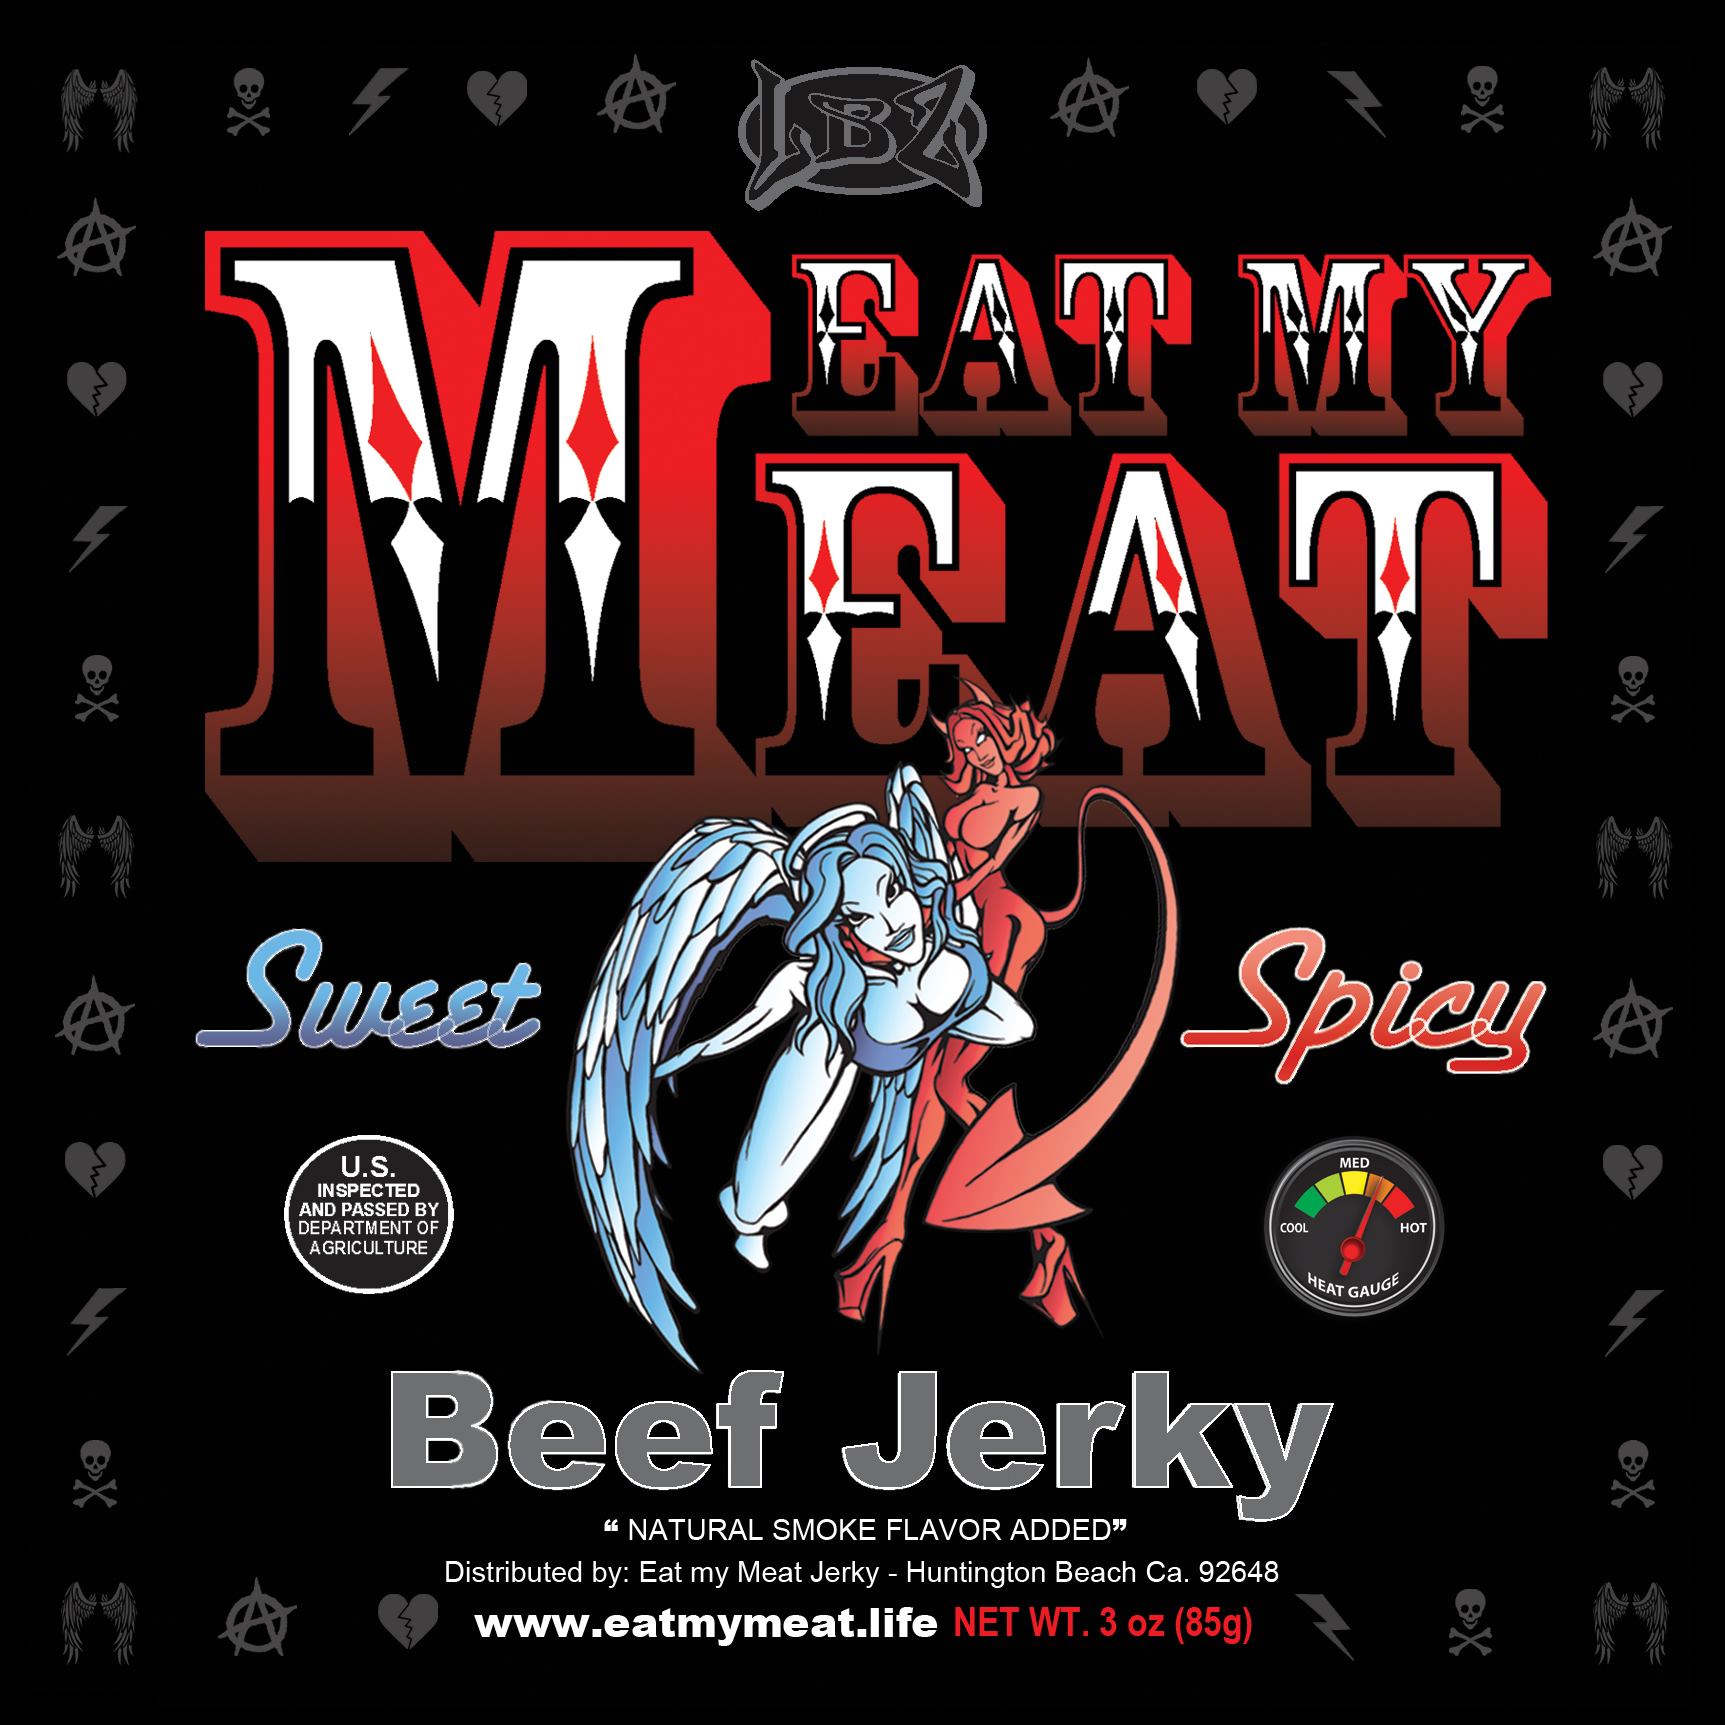 LBZ "EAT MY MEAT" PREMIUM JERKY